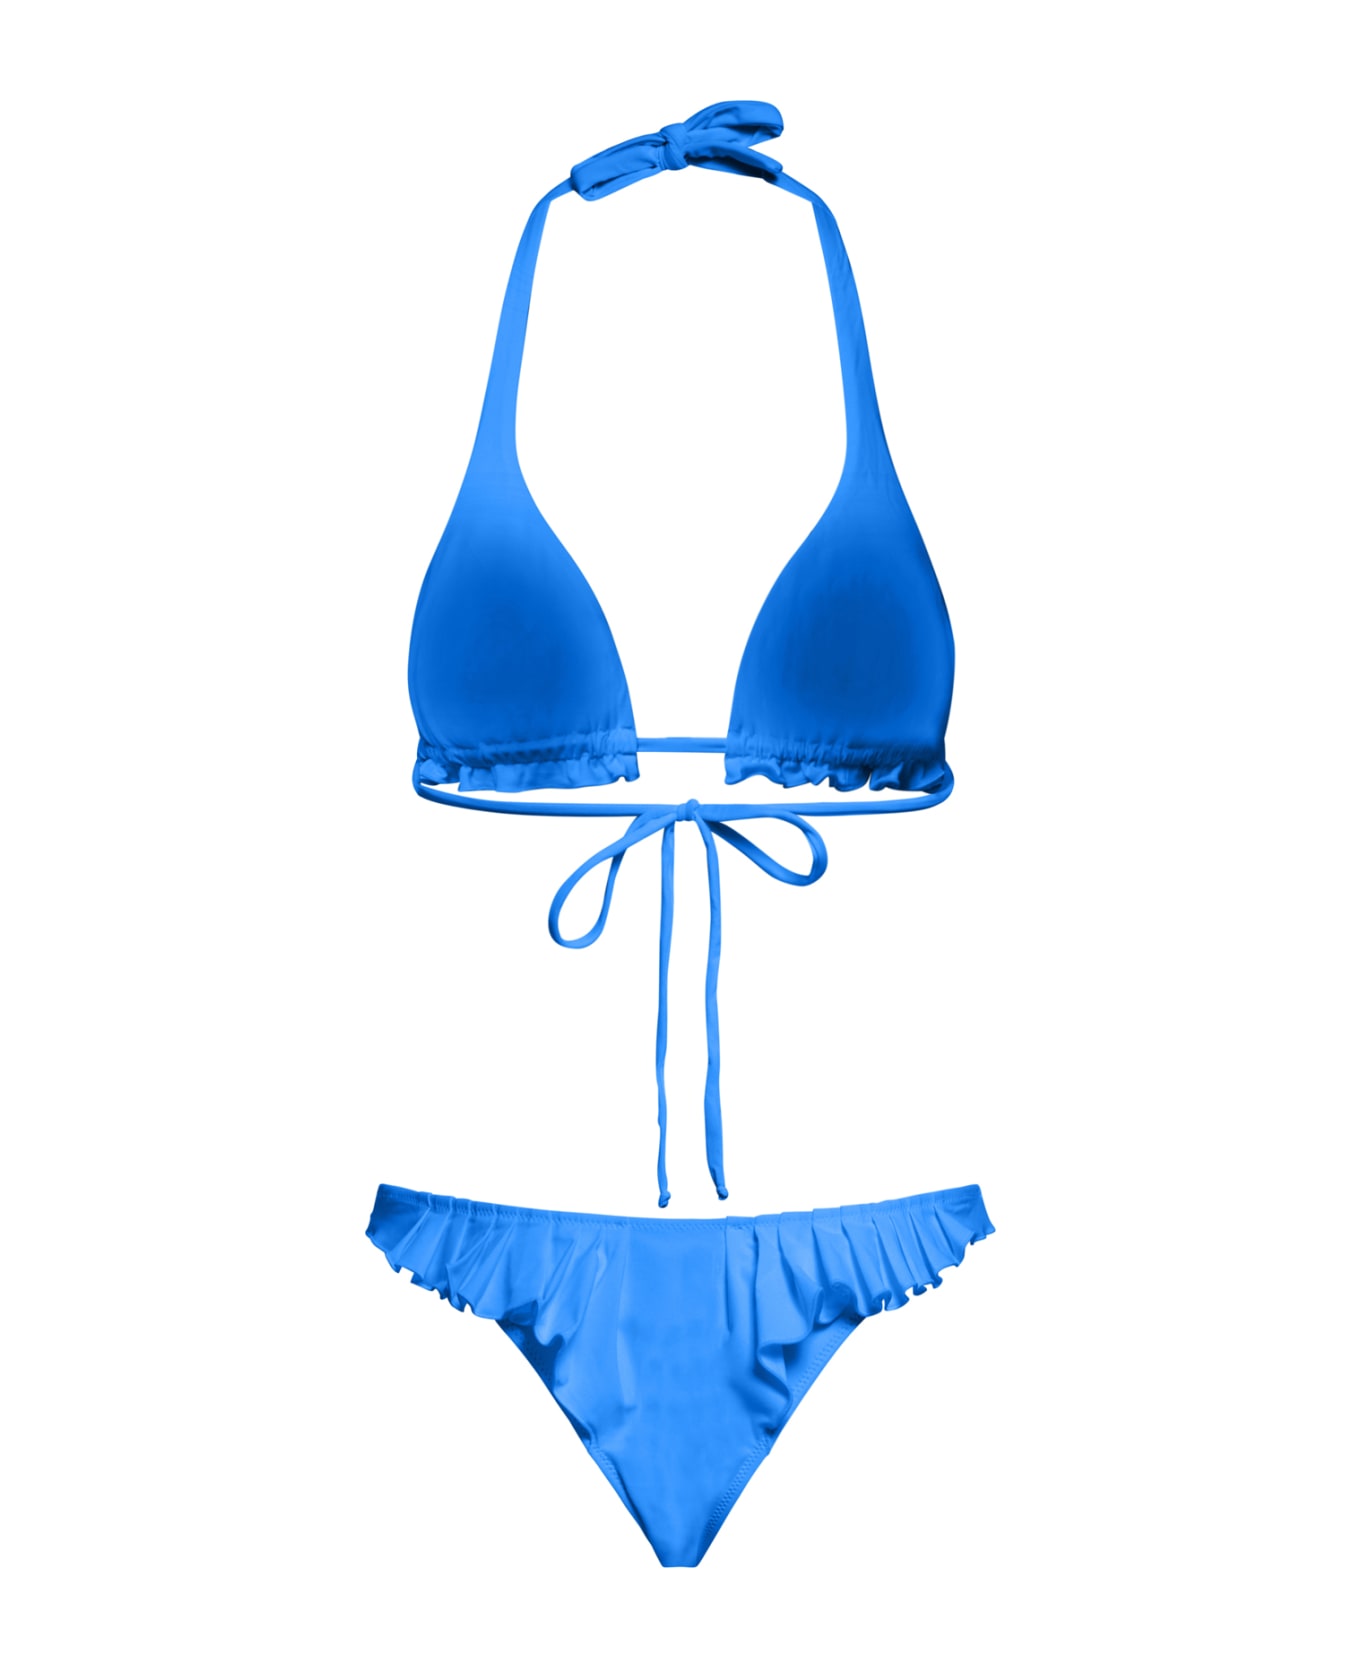 Sucrette Bikini - Bluette